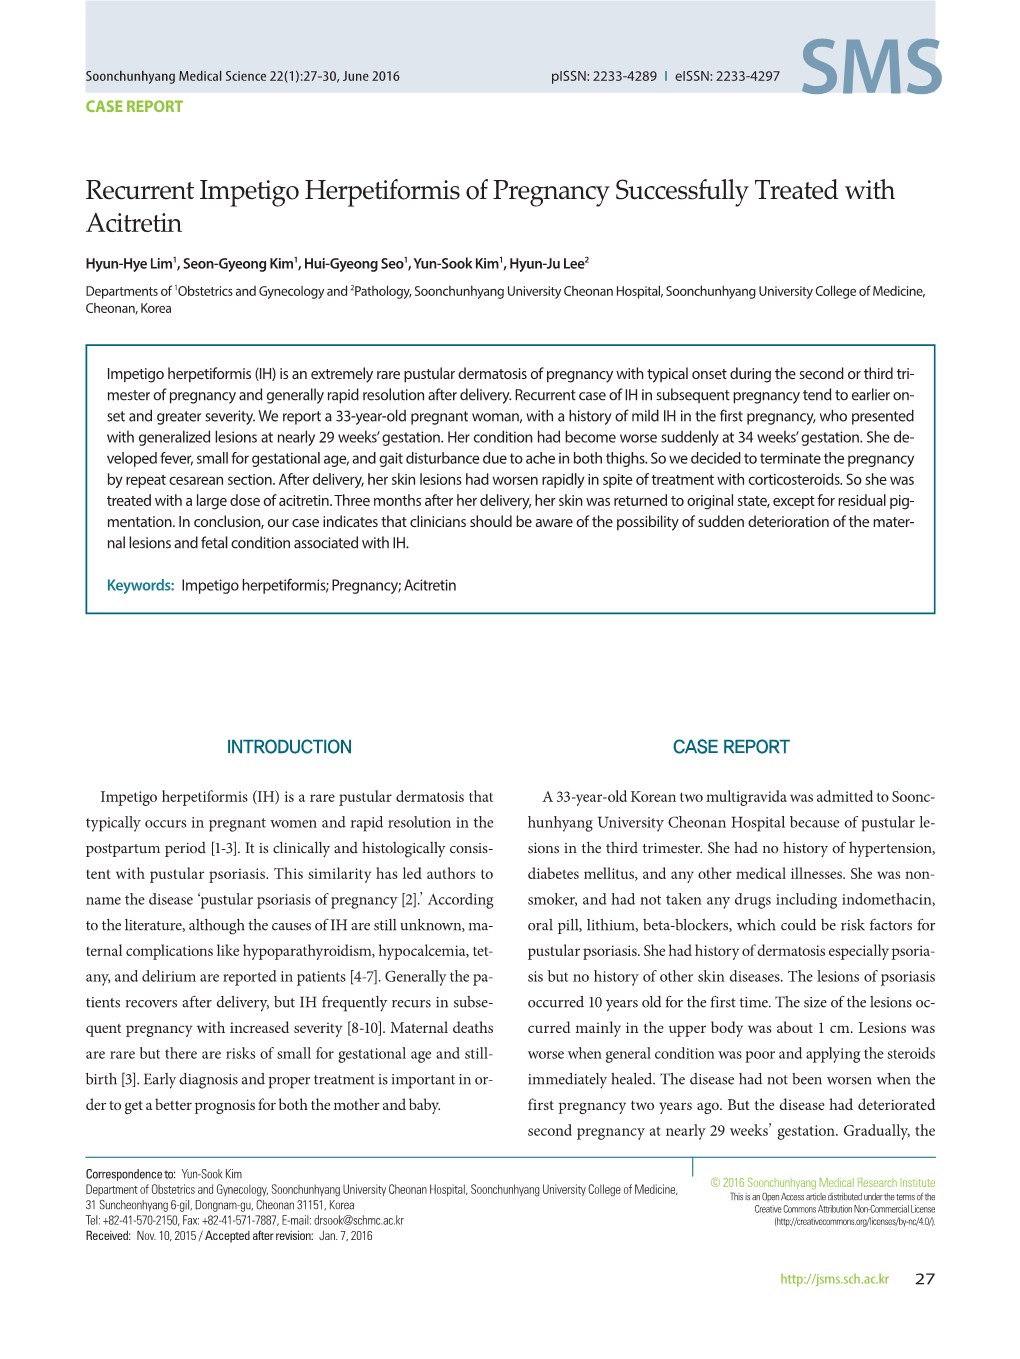 Recurrent Impetigo Herpetiformis of Pregnancy Successfully Treated with Acitretin